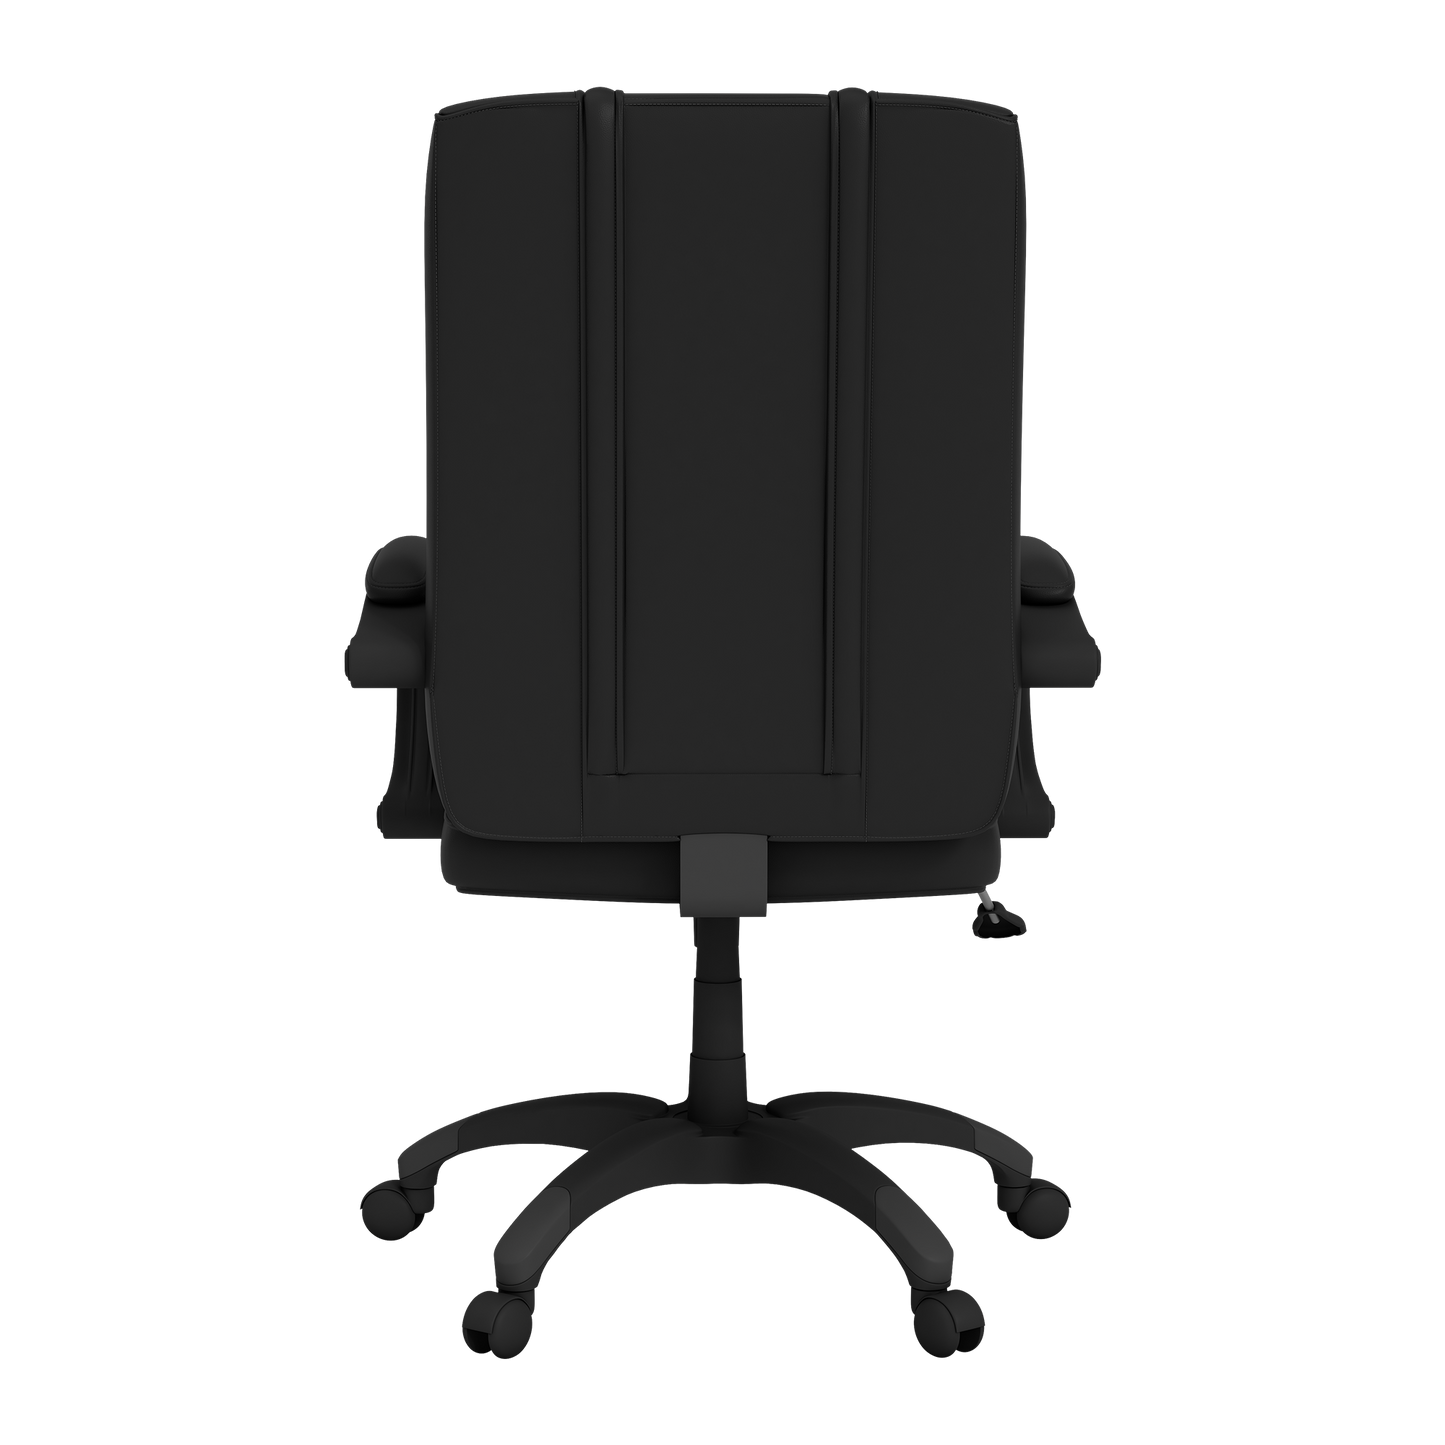 Office Chair 1000 with 8oki Wordmark Logo